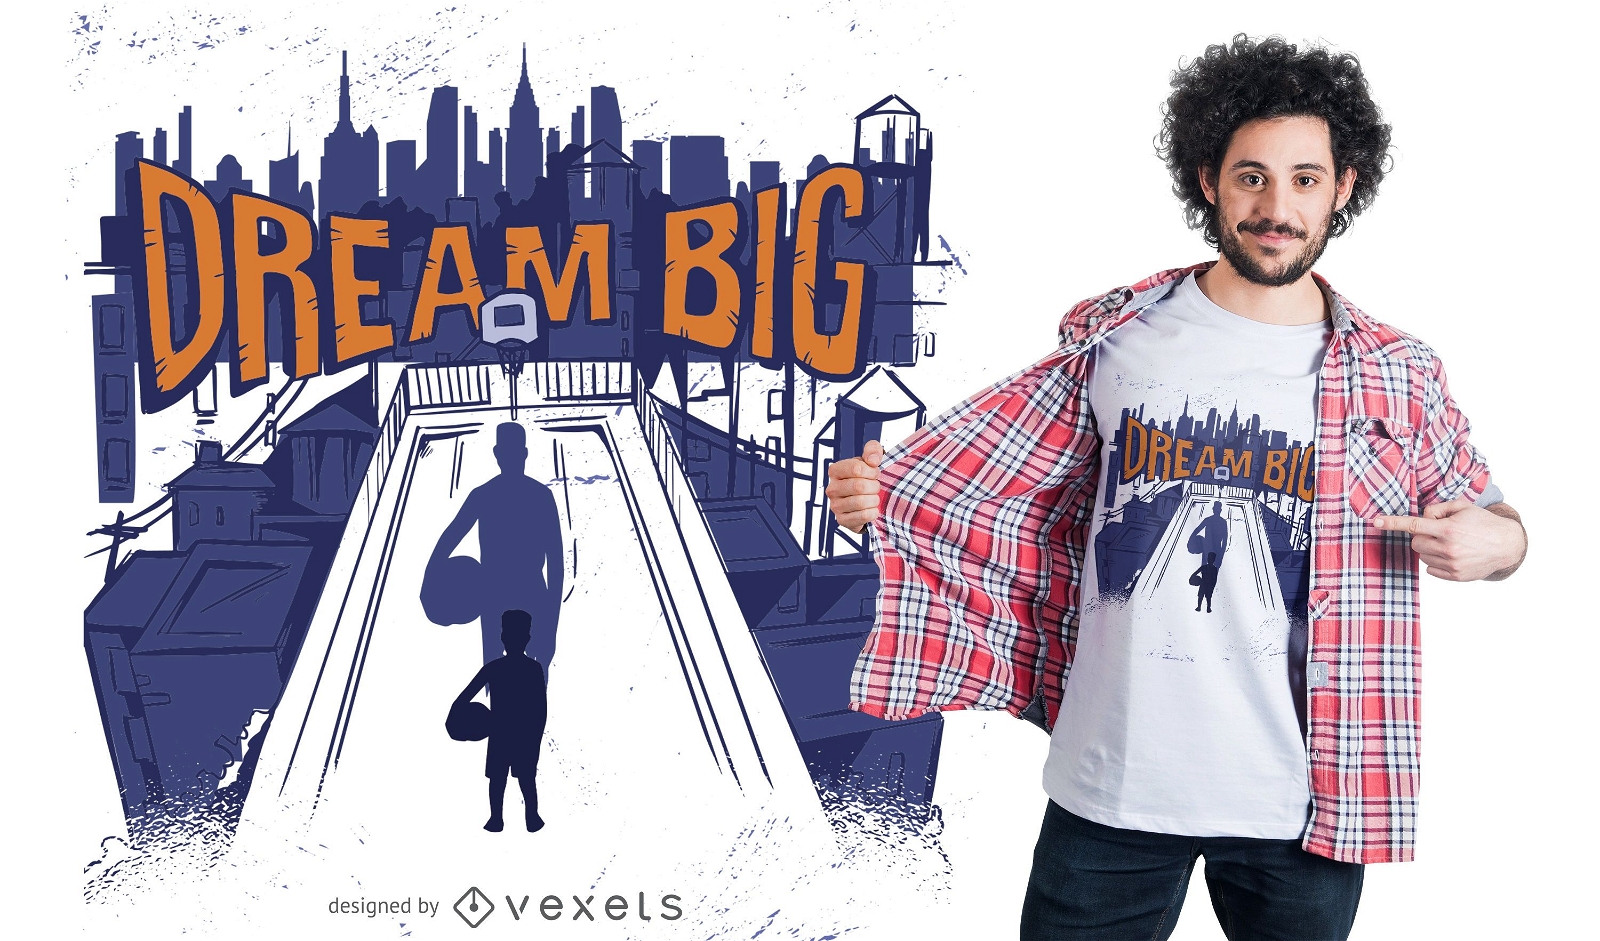 Traum Big Basketball T-Shirt Design